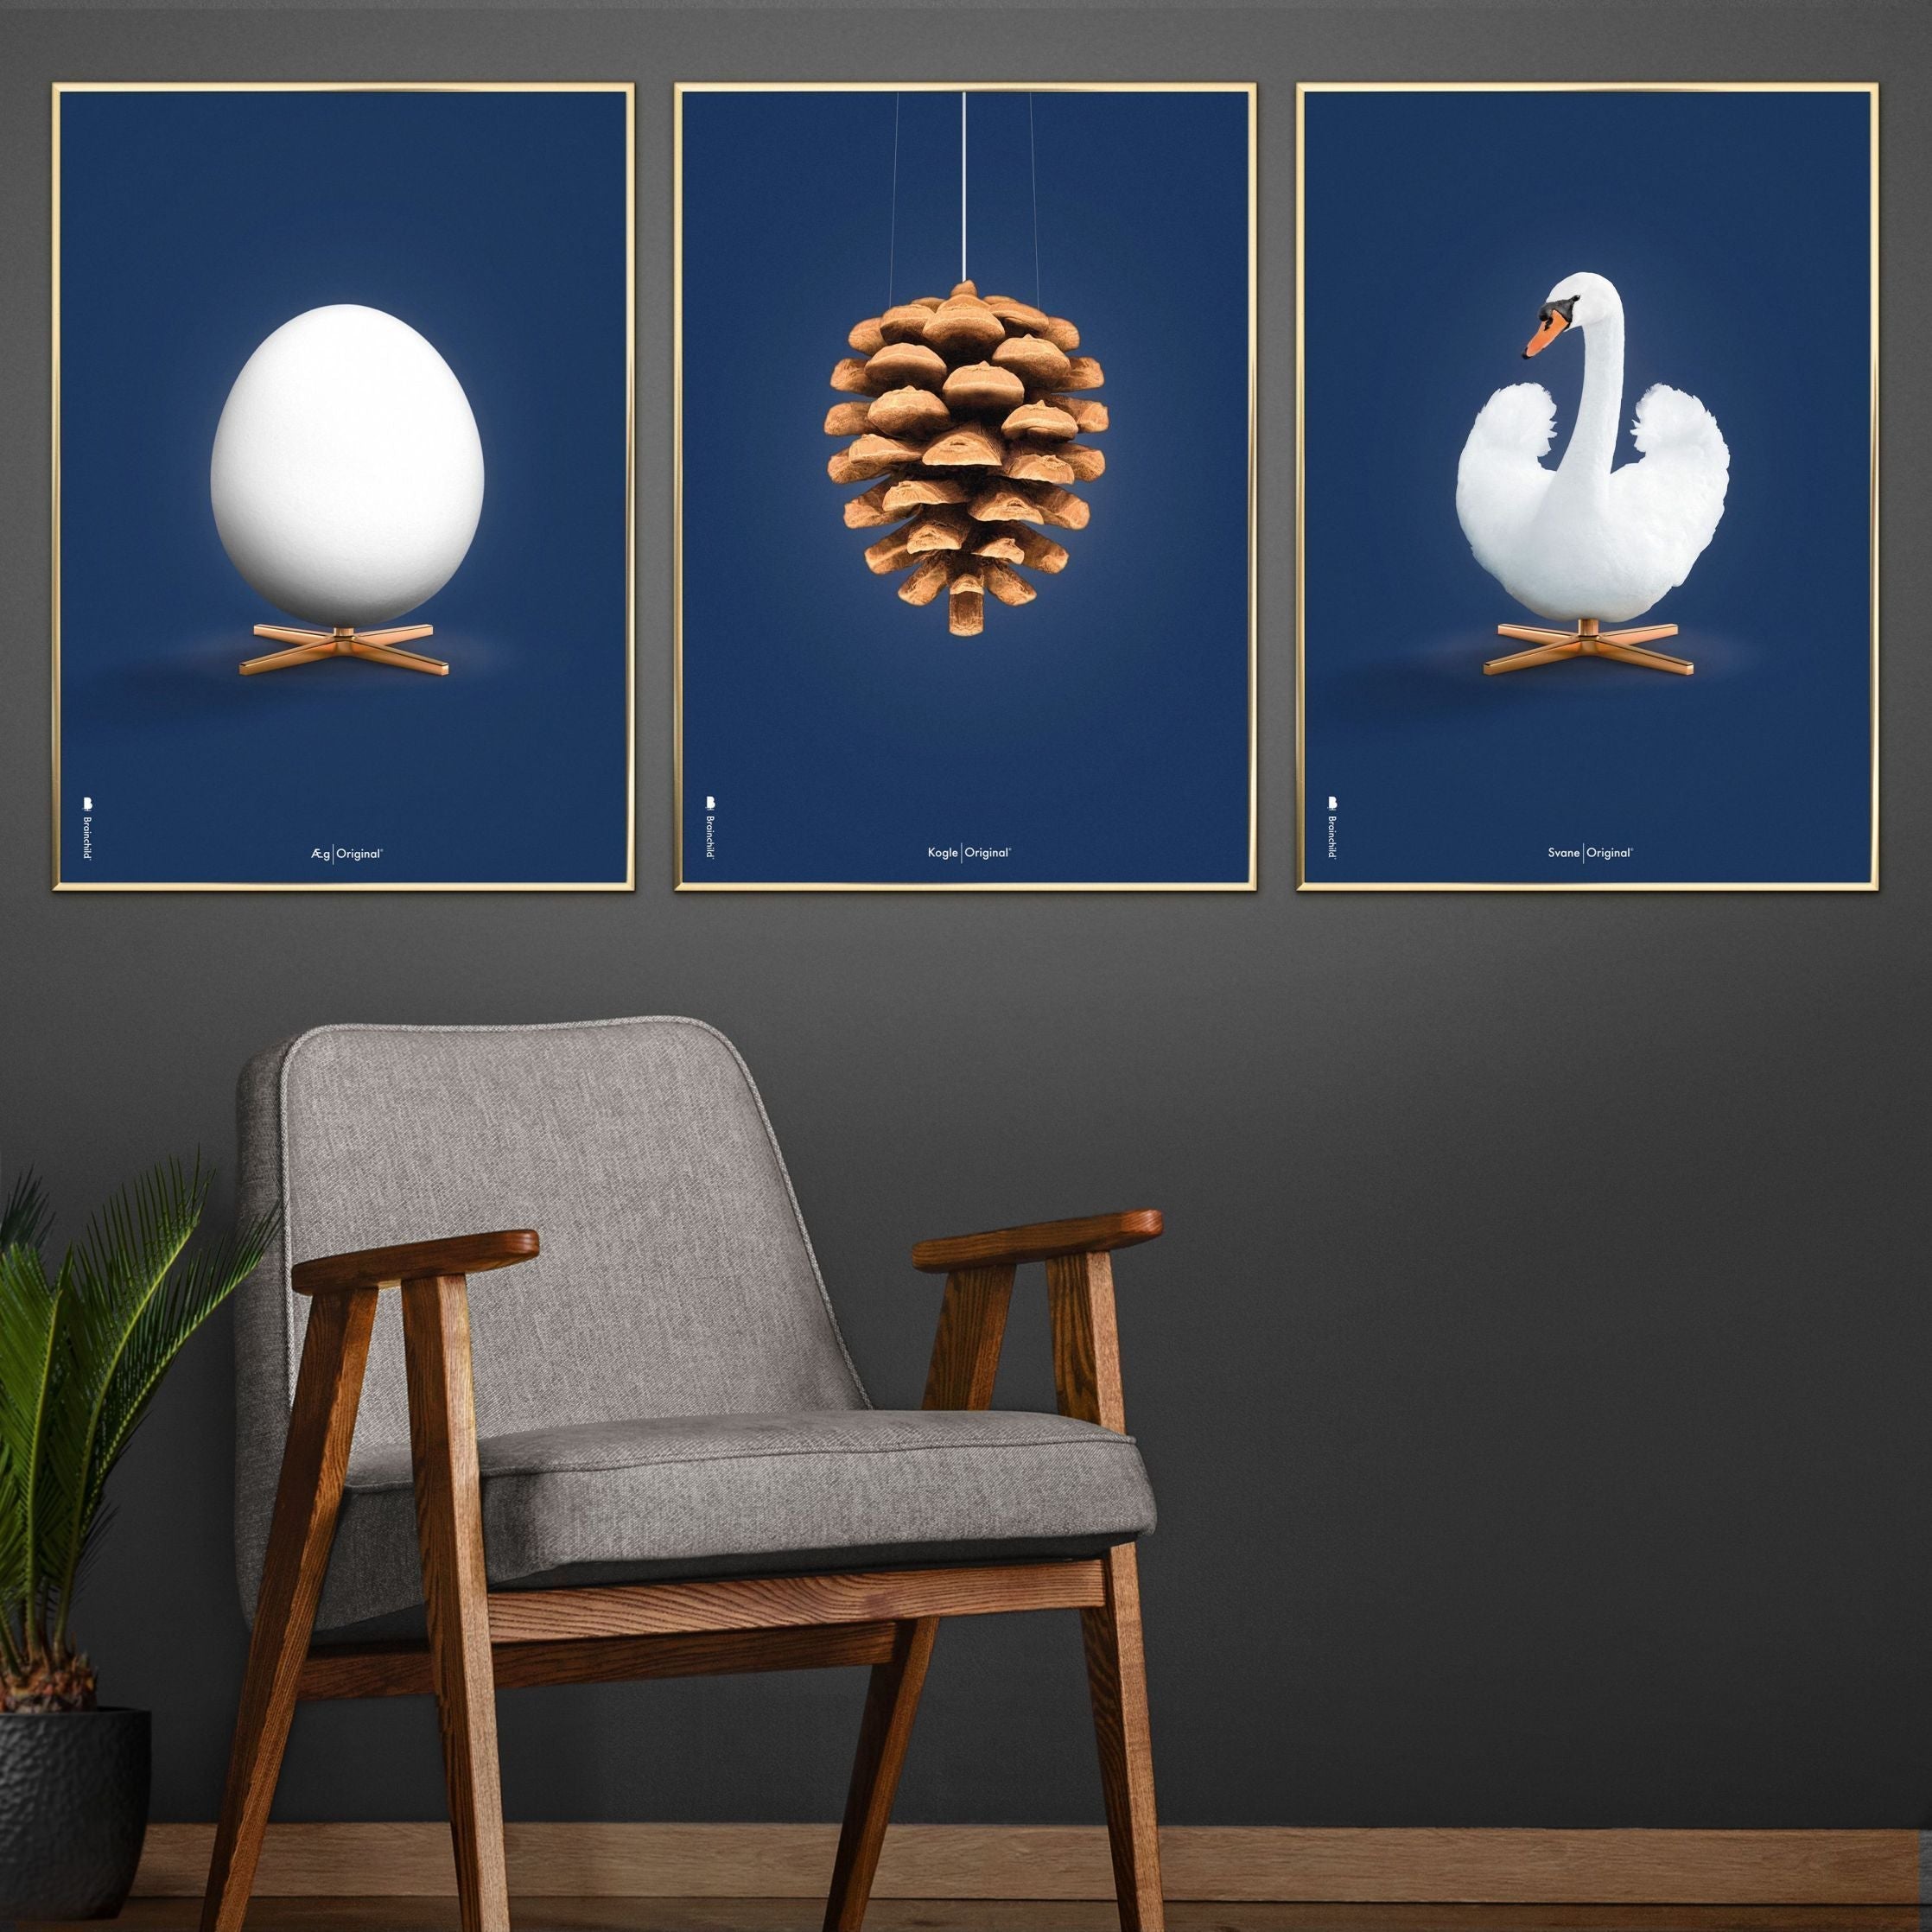 Brainchild Swan Classic Affisch, ram i lätt trä 70x100 cm, mörkblå bakgrund